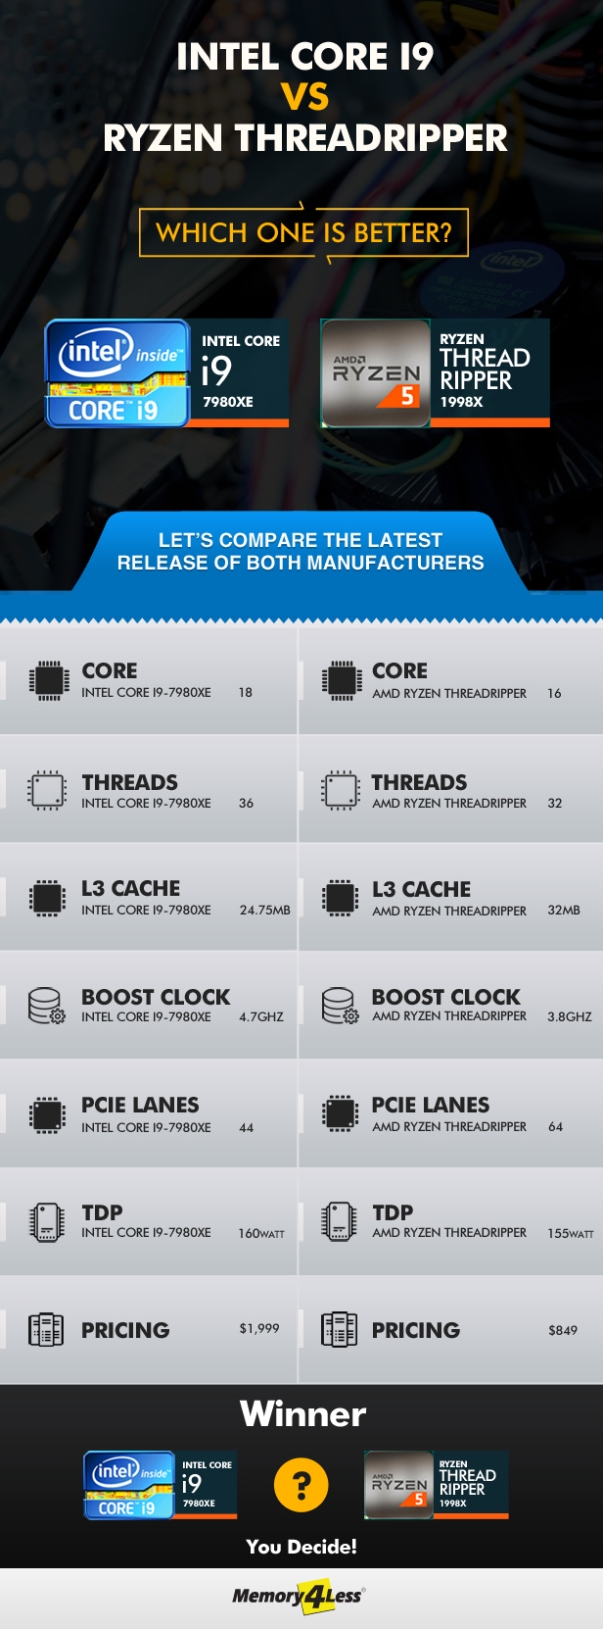 Intel-Core-i9-vs-Thread-Ripper-changes-size-2